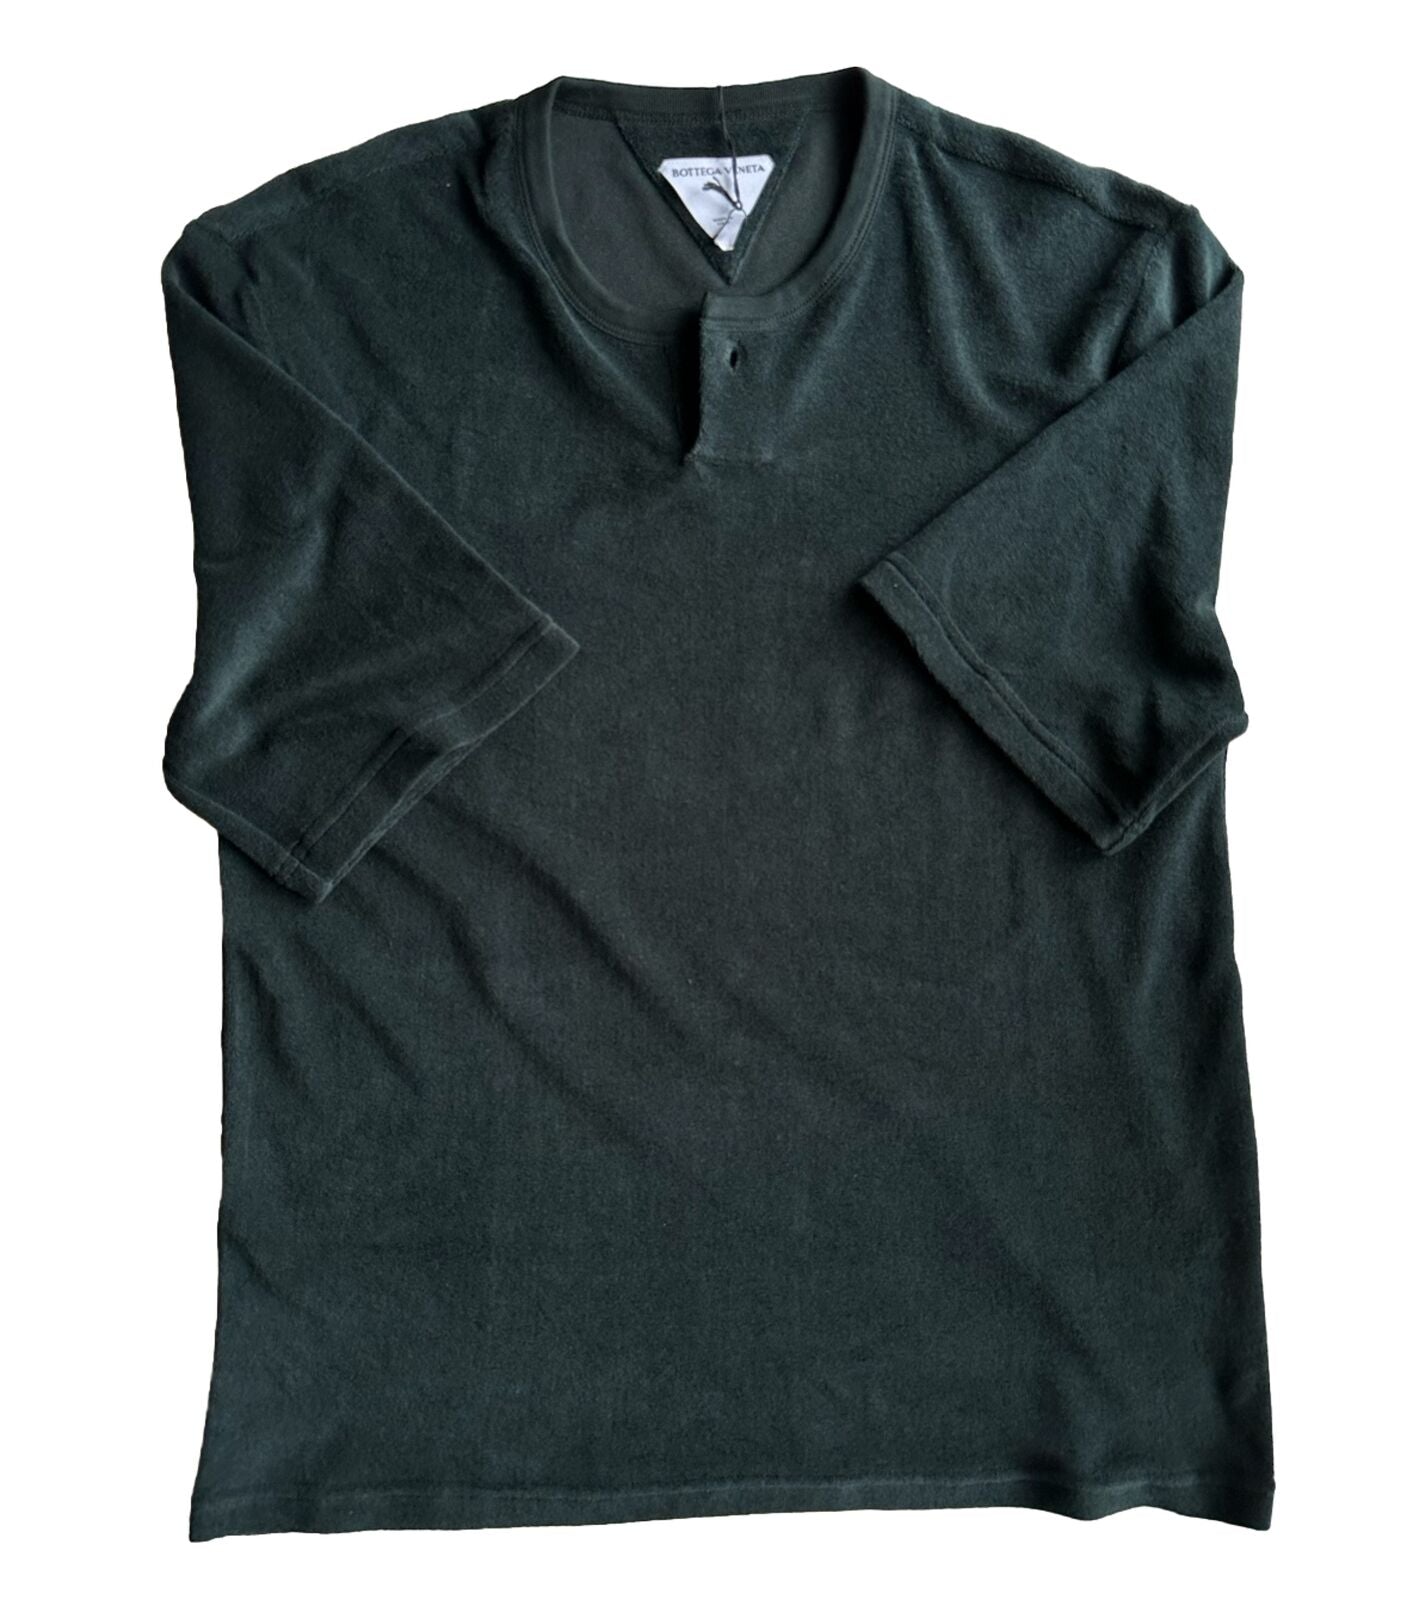 Neu mit Etikett: 550 $ Bottega Veneta Herren-T-Shirt aus Frottee-Jersey Grün XL Italien 656849